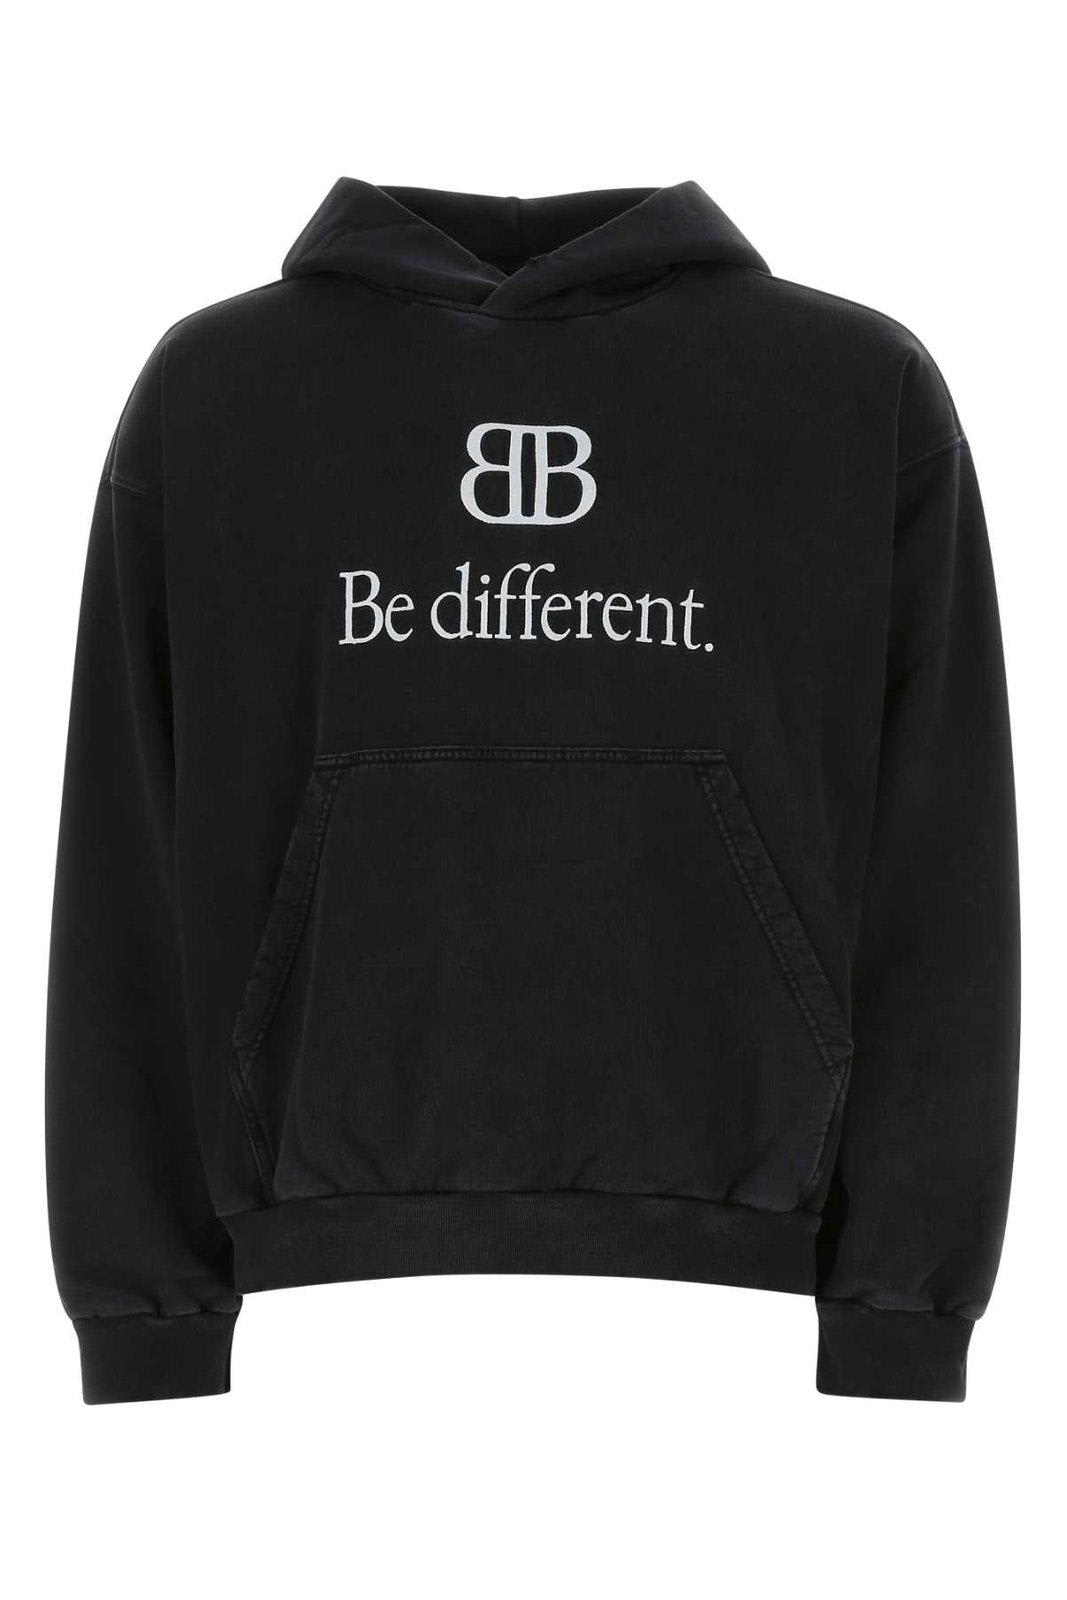 Balenciaga Bb Be Different Hoodie